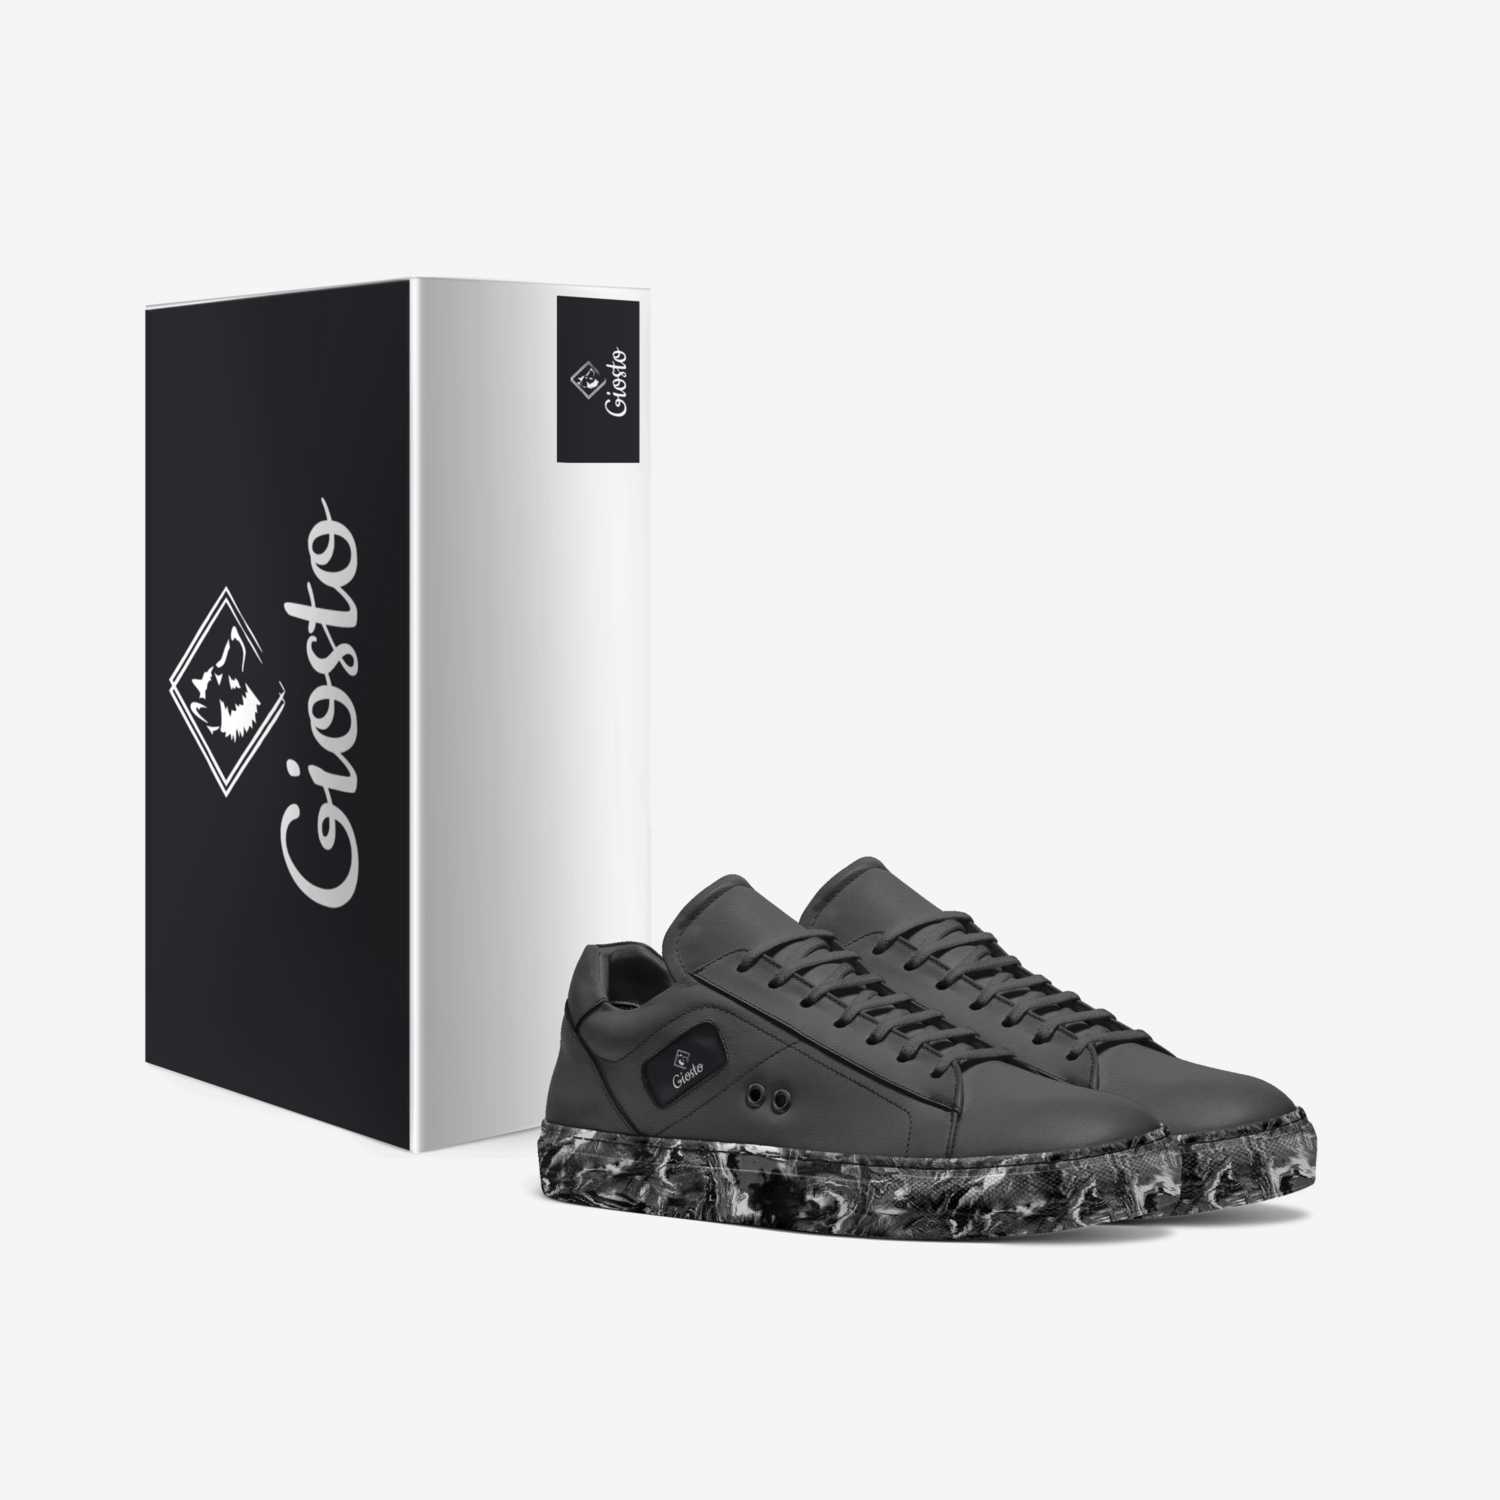 Giosto E custom made in Italy shoes by Giorgio Franco | Box view